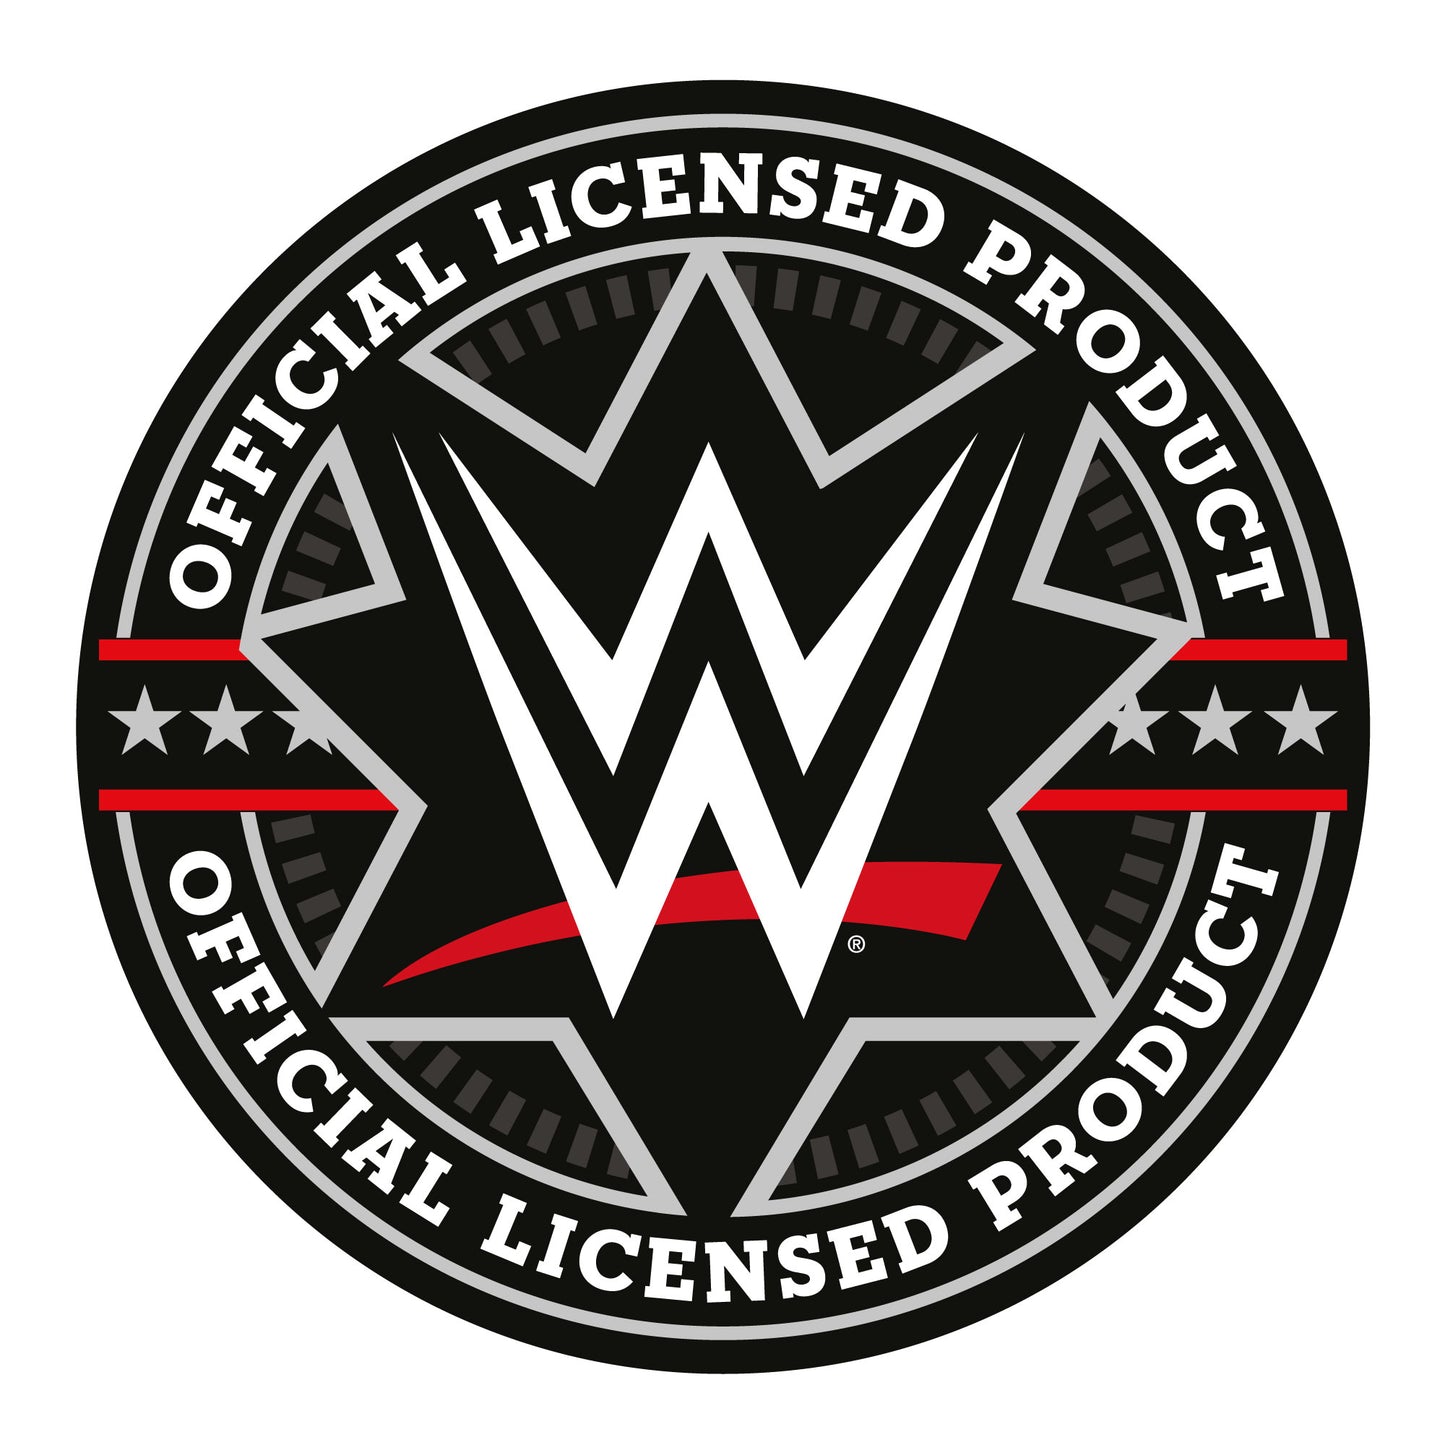 WWE - Asuka Wrestler Decal + Bonus Wall Sticker Set